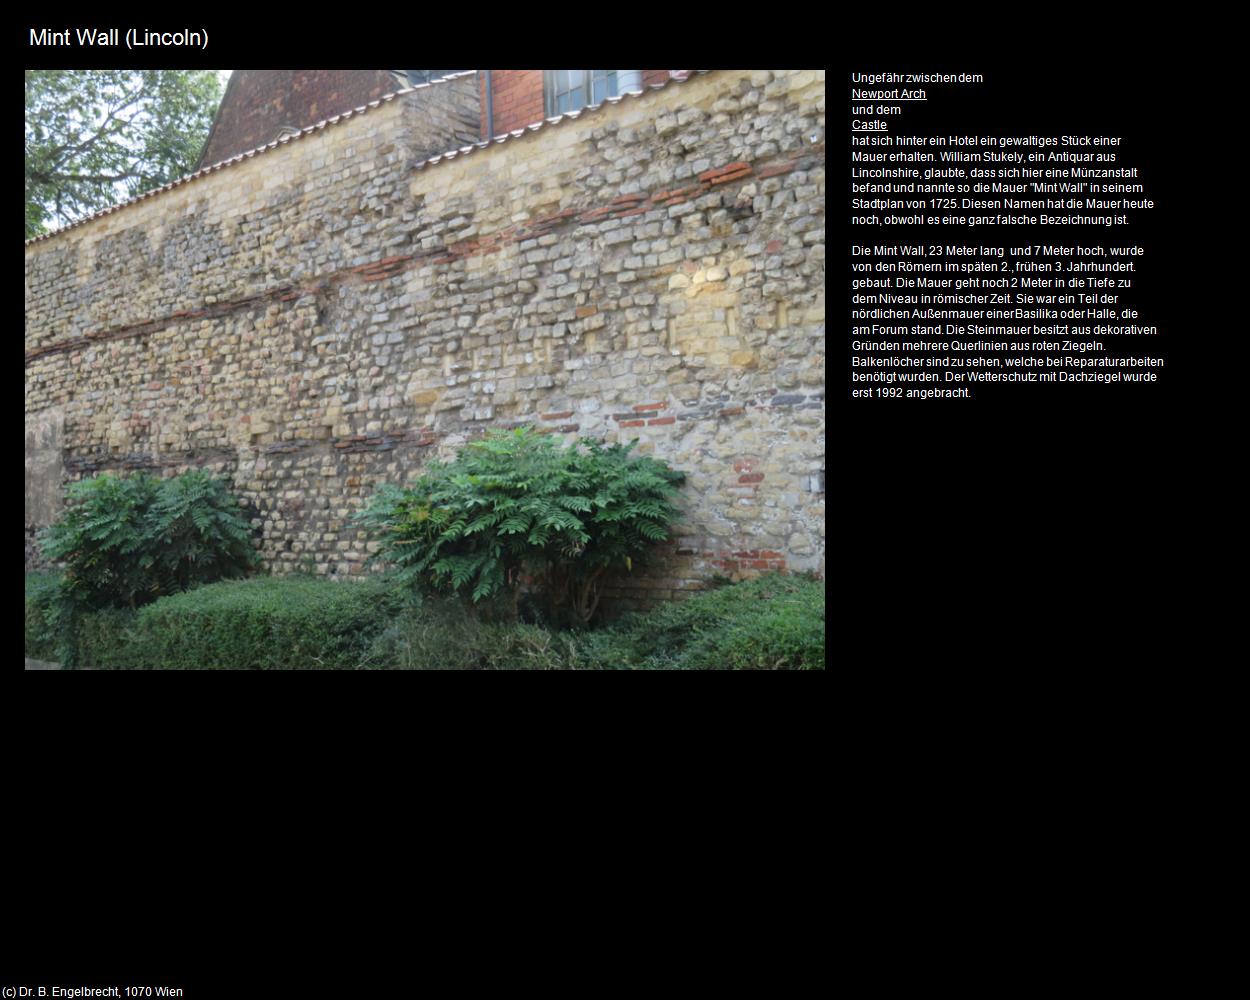 Mint Wall  (Lincoln, England) in Kulturatlas-ENGLAND und WALES(c)B.Engelbrecht